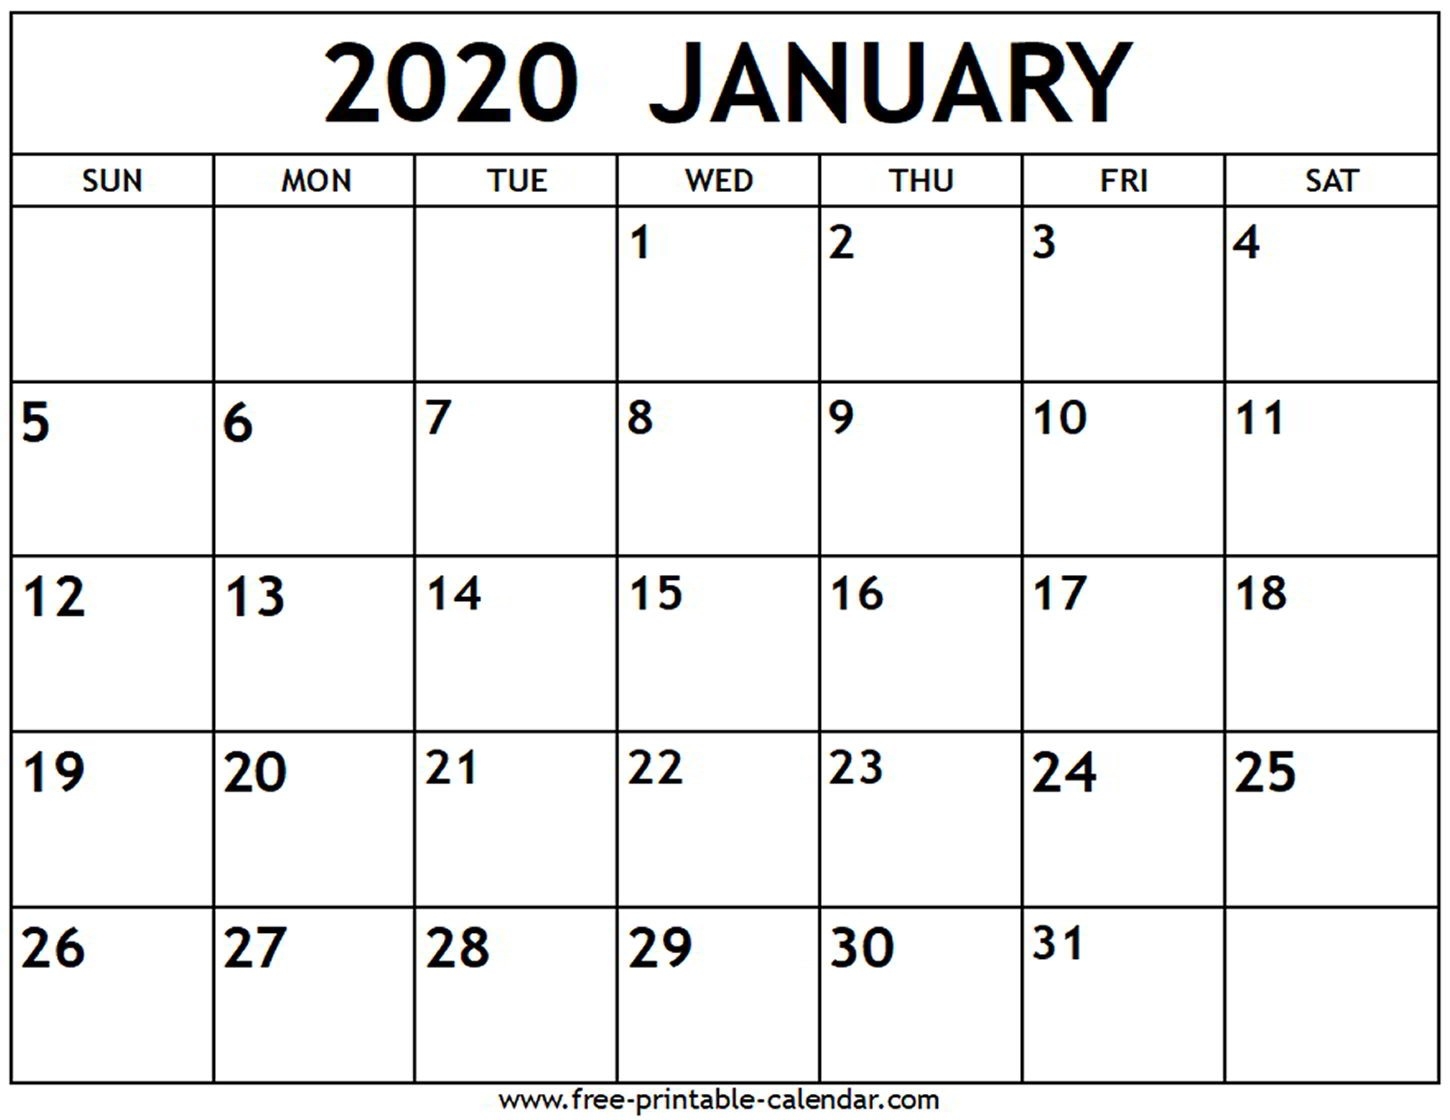 January 2020 Calendar - Free-Printable-Calendar-January Calendar Of 2020